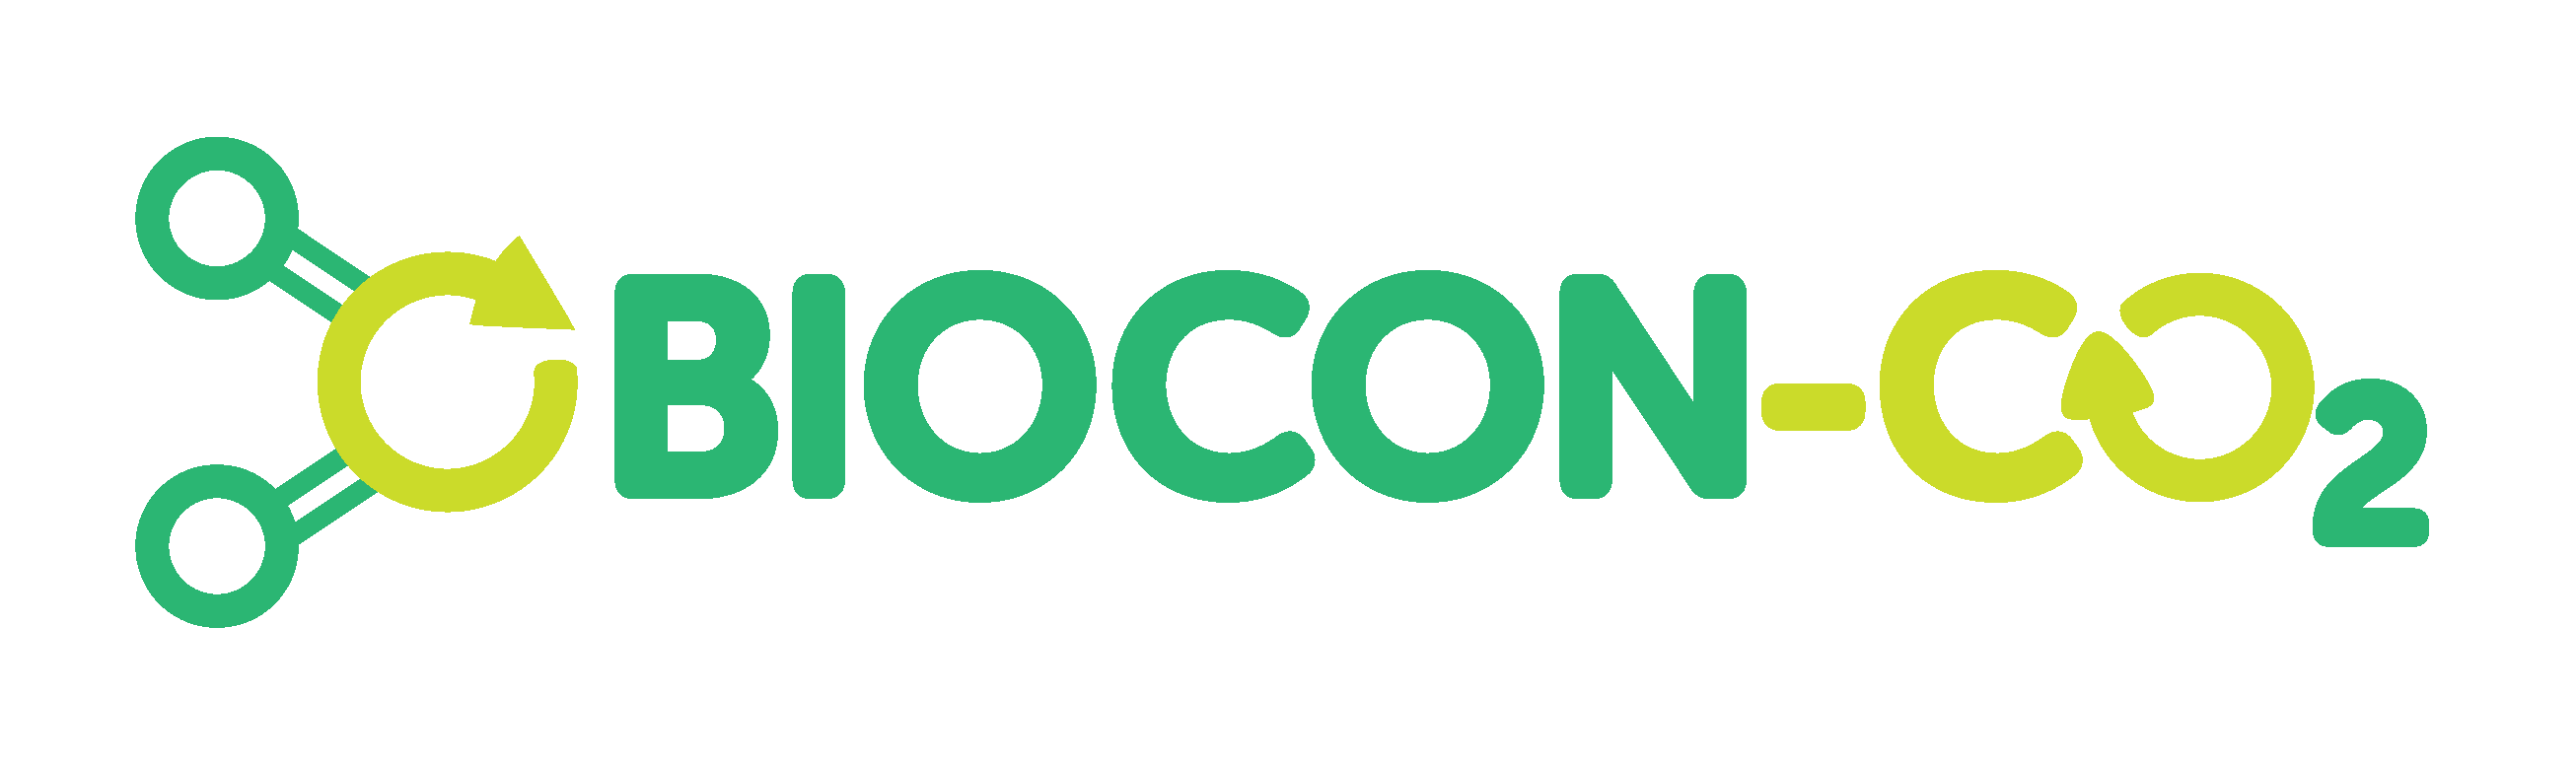 Biocon Logo - BIOCON LOGO COL_01